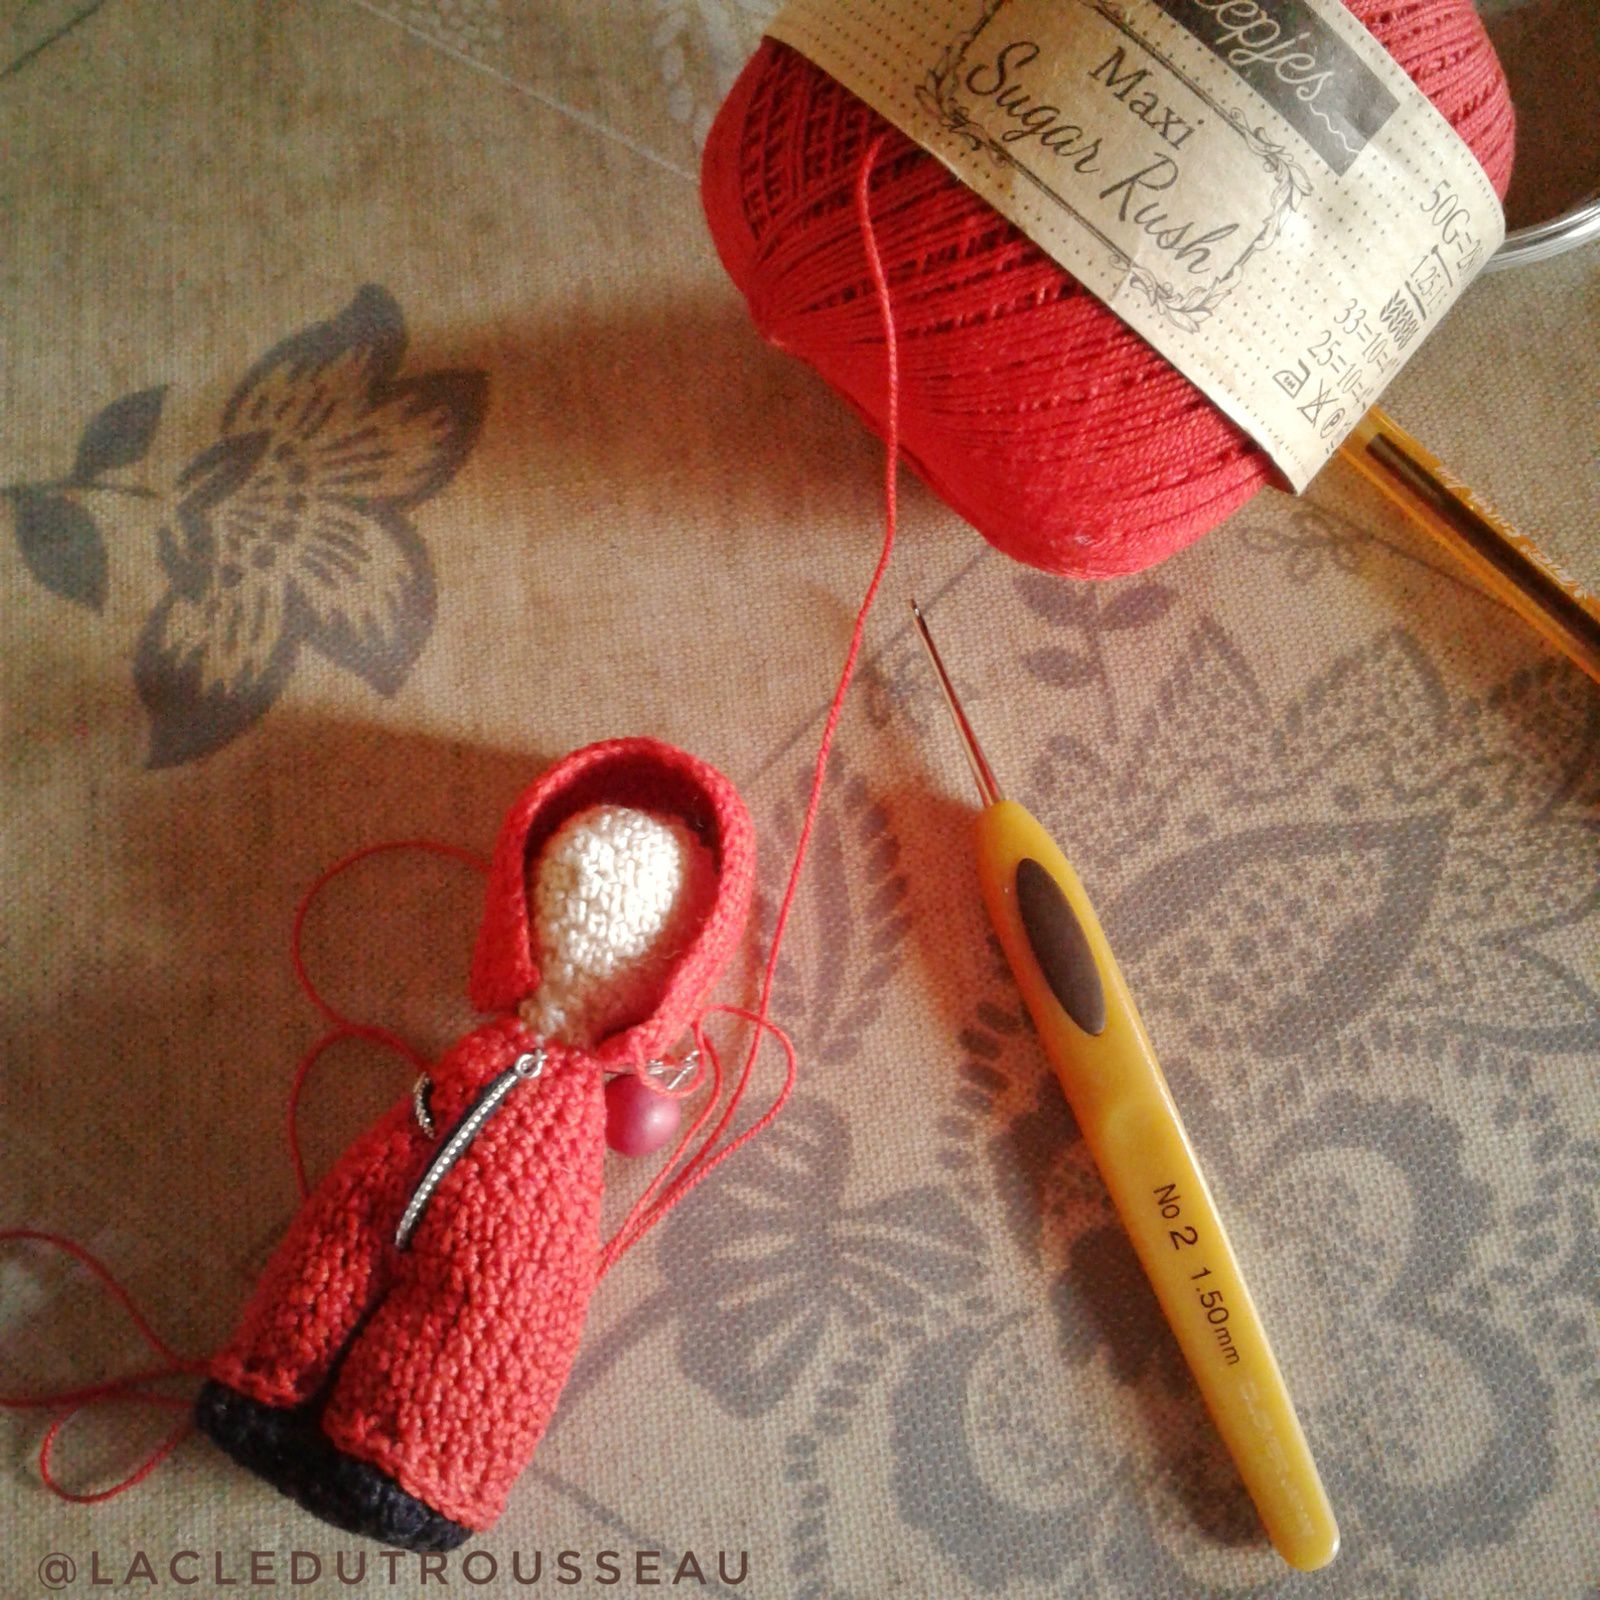 Crochet doll, casa de papel, miniidole, french crochet, netflix